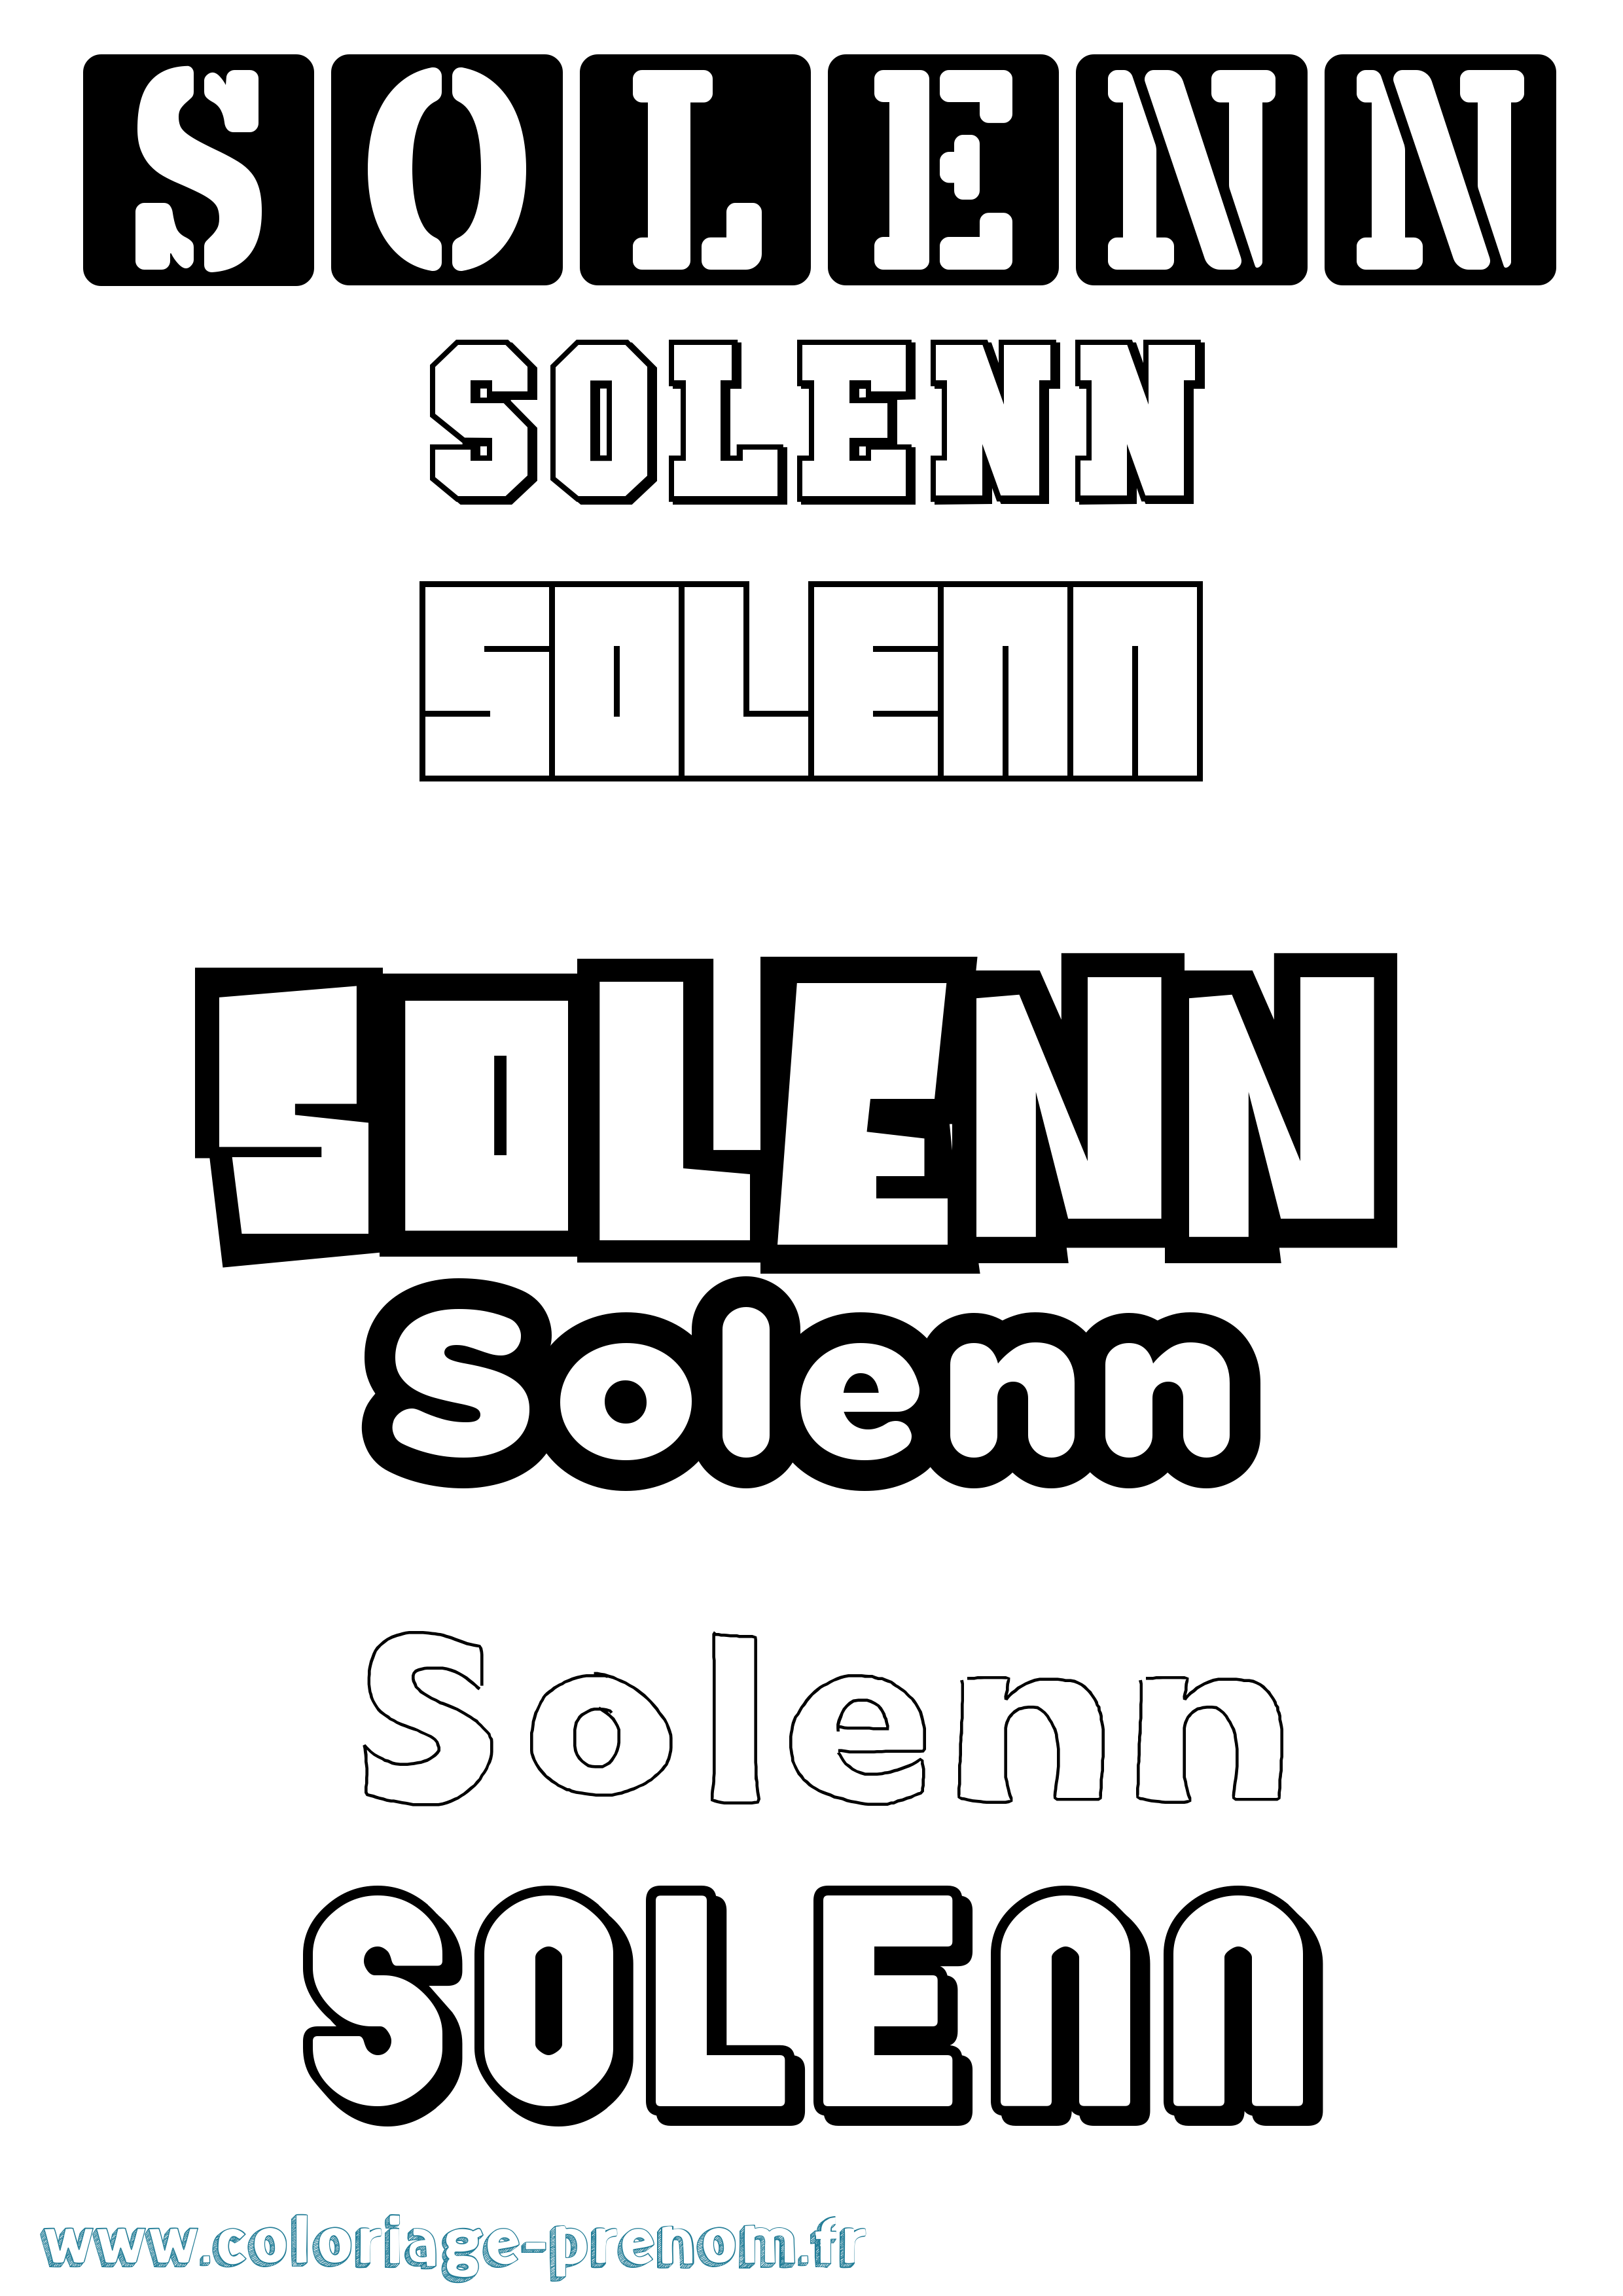 Coloriage prénom Solenn